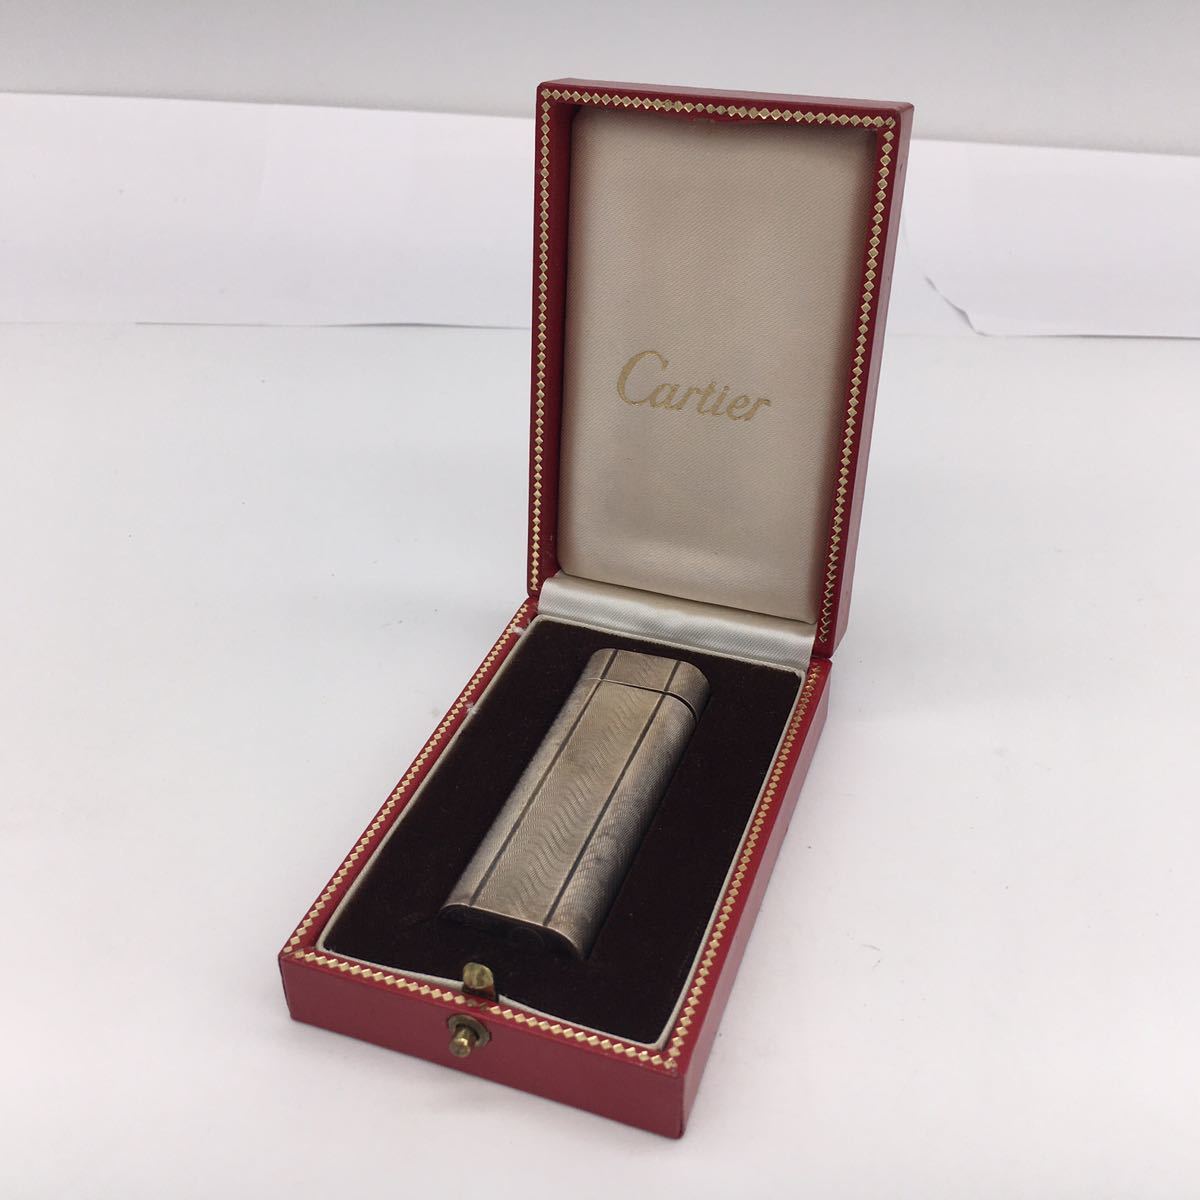 Cartier カルティエ ガスライター 波柄 楕円形 オーバル シルバー カラー 7431642 箱付き ローラー式 喫煙具 Ca-60